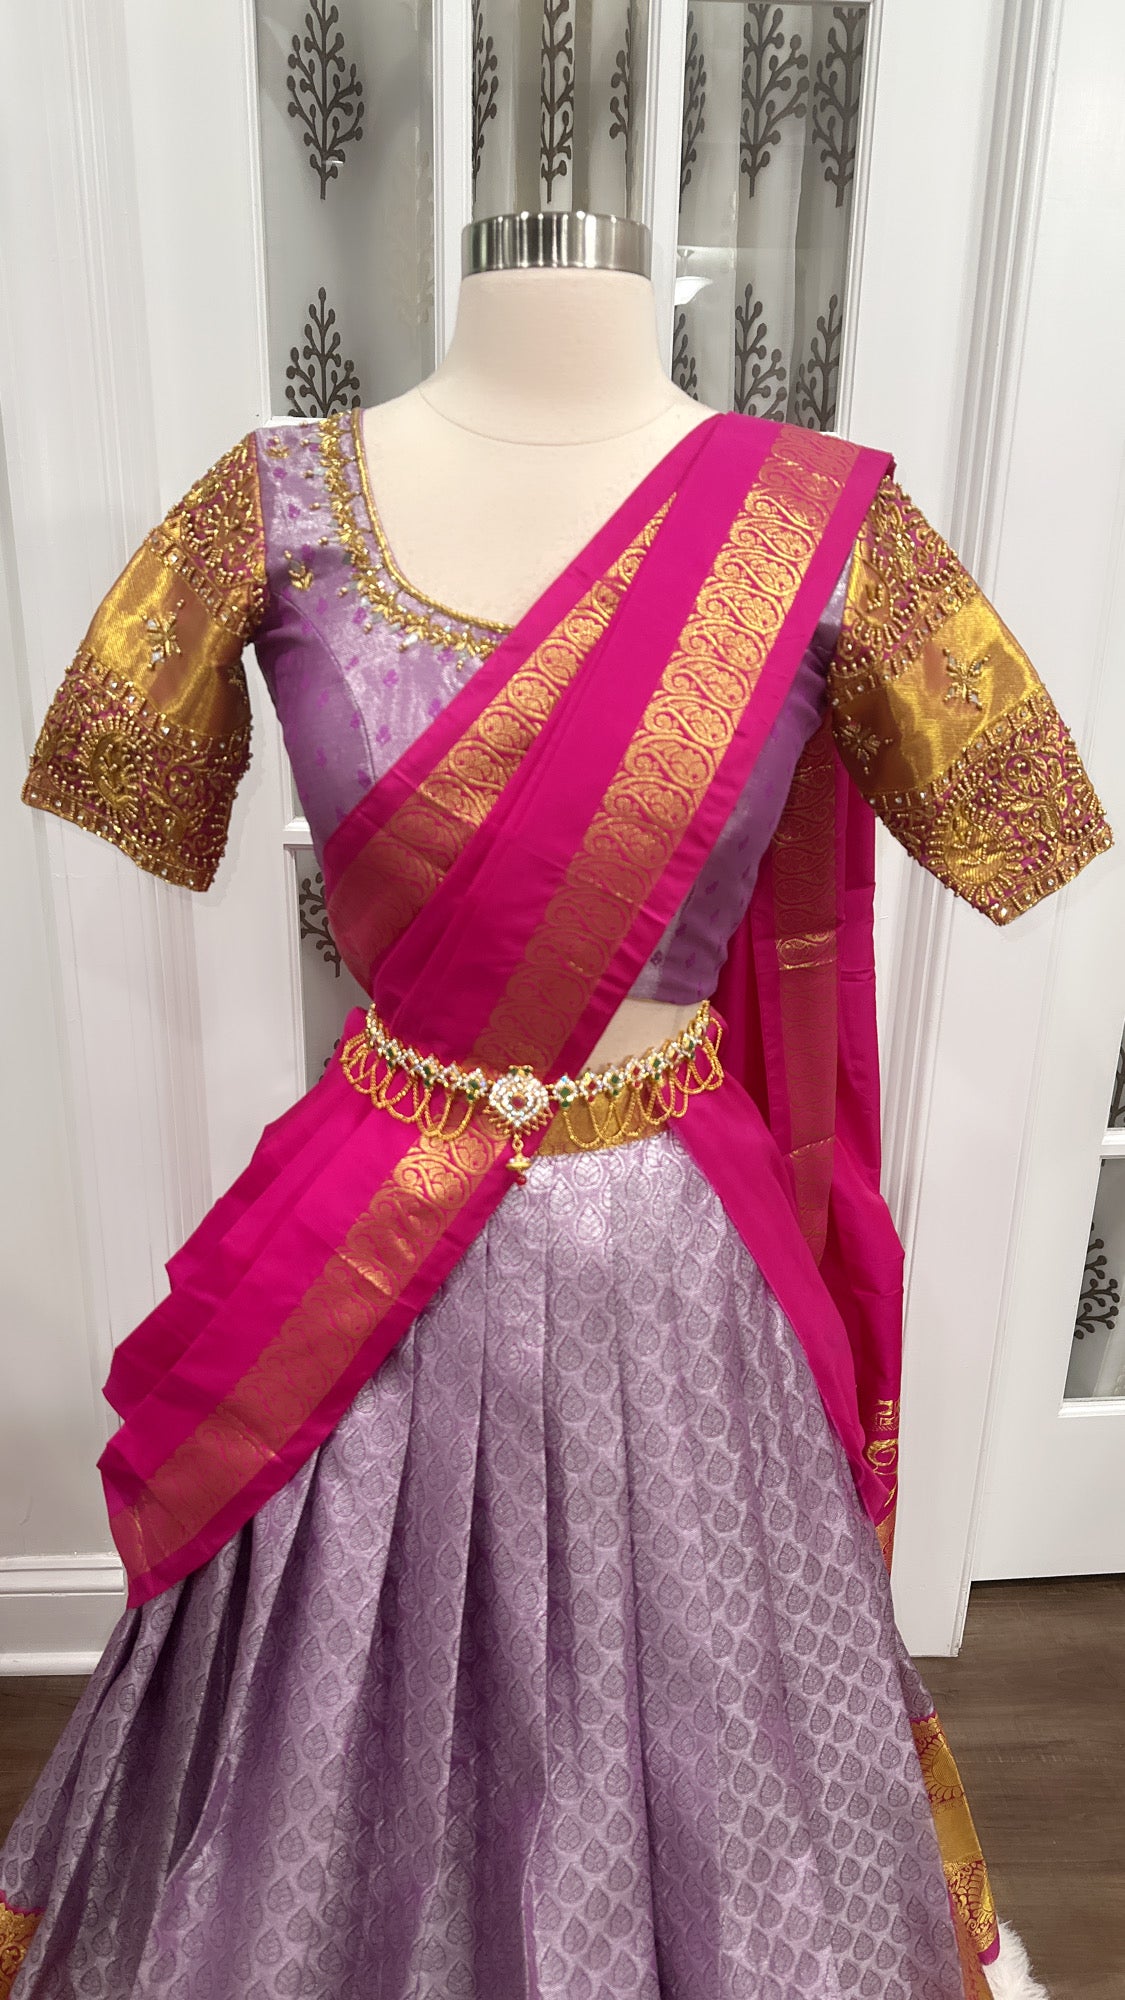 Elegant Lavender color Kanchi Pattu half saree Langa Voni for teens with grand Maggam work blouse | Half saree function | Teen Partywear dress Ready 2 ship